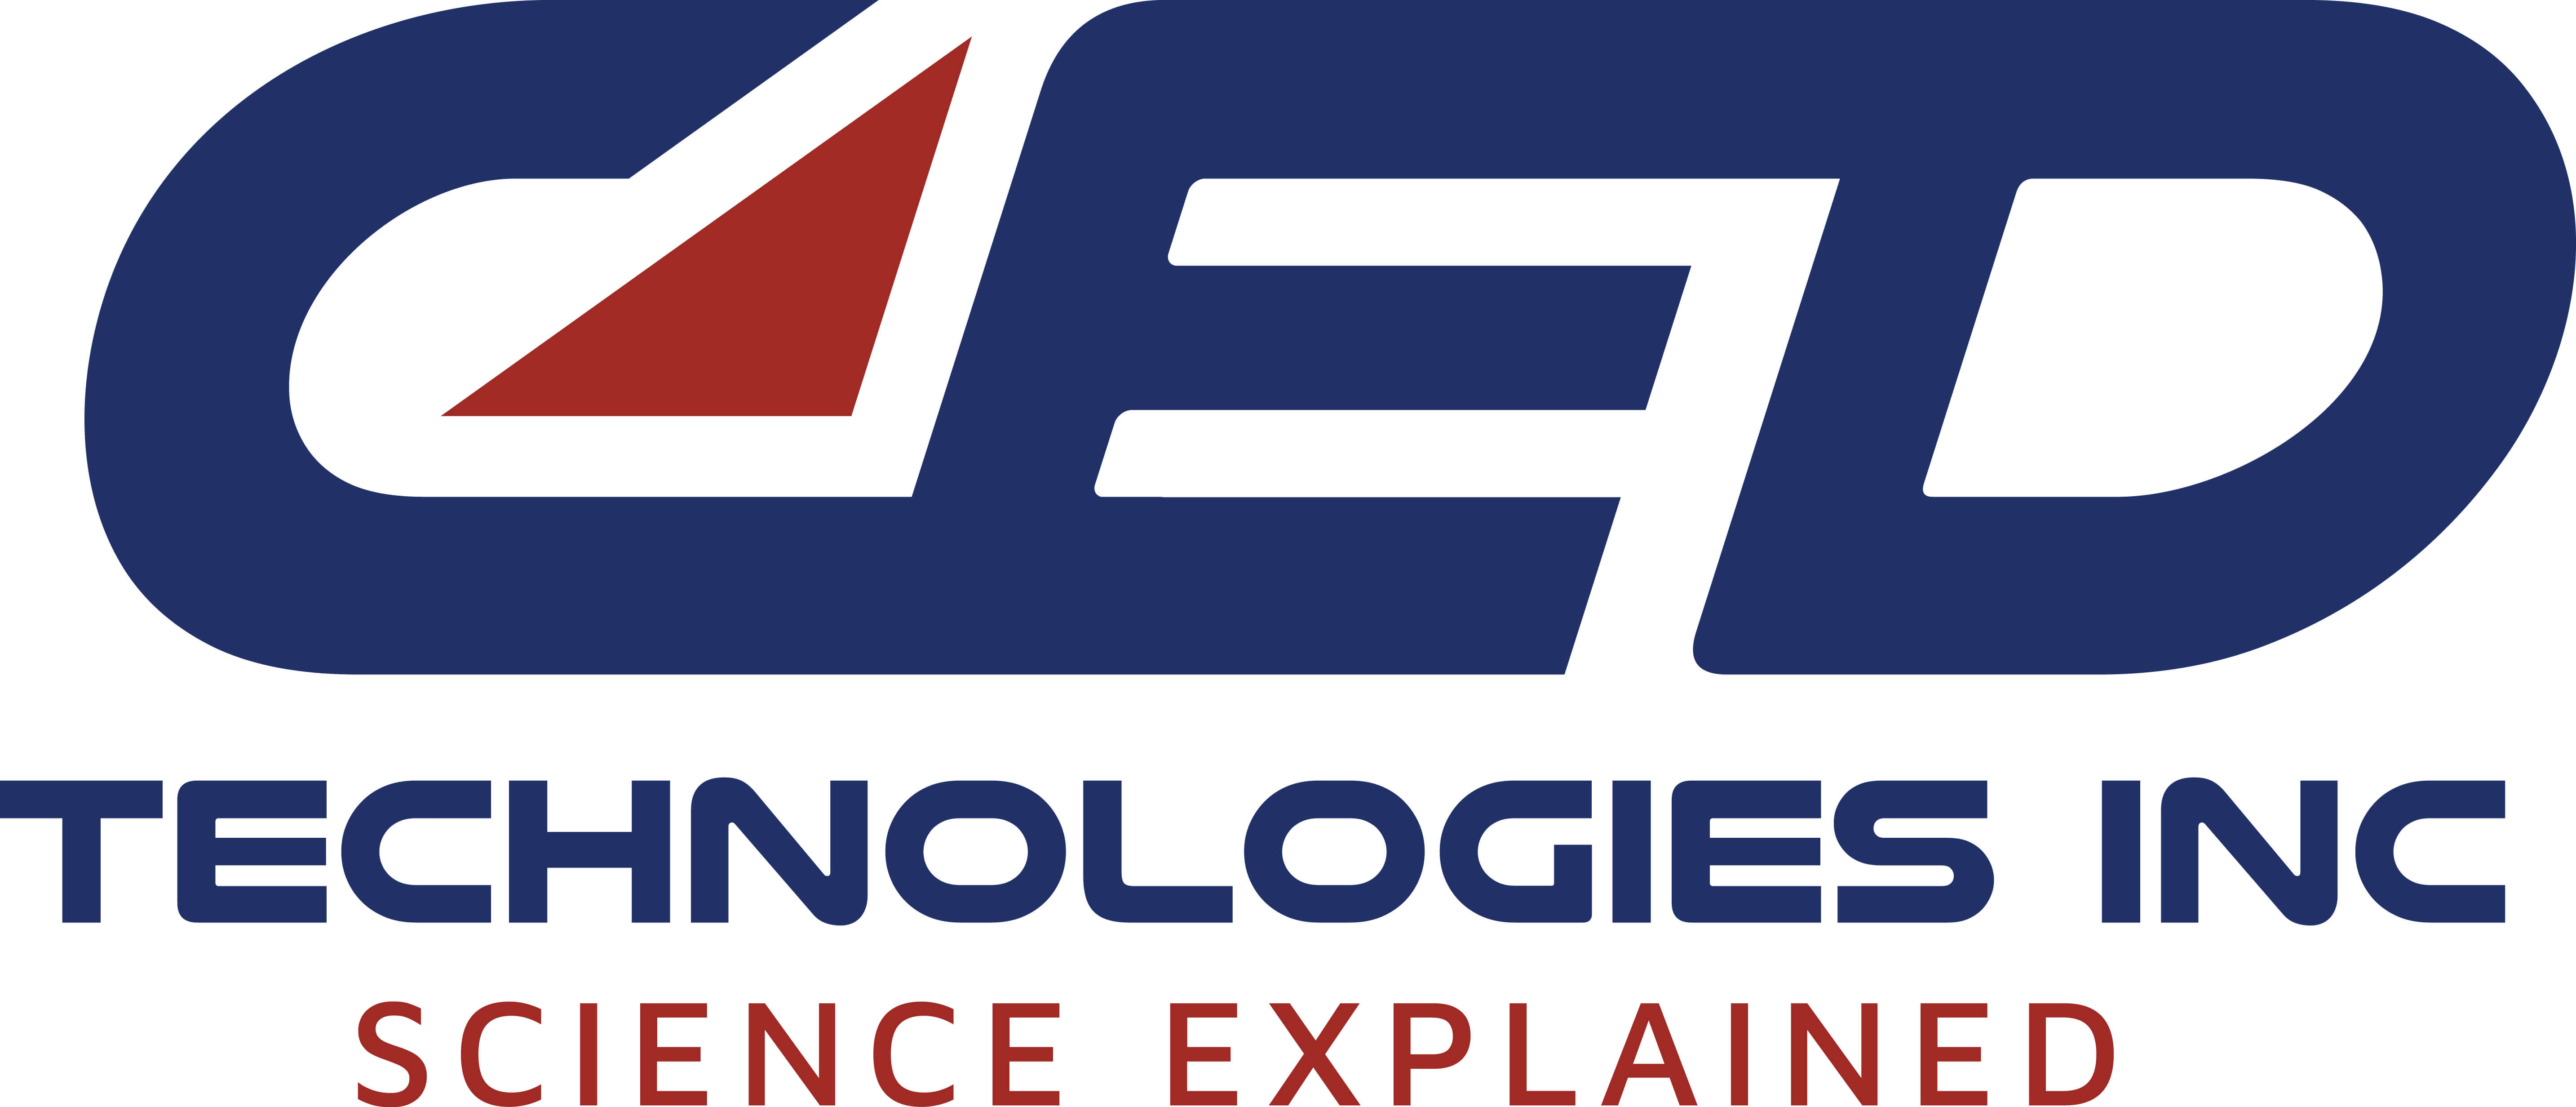 CED Technologies